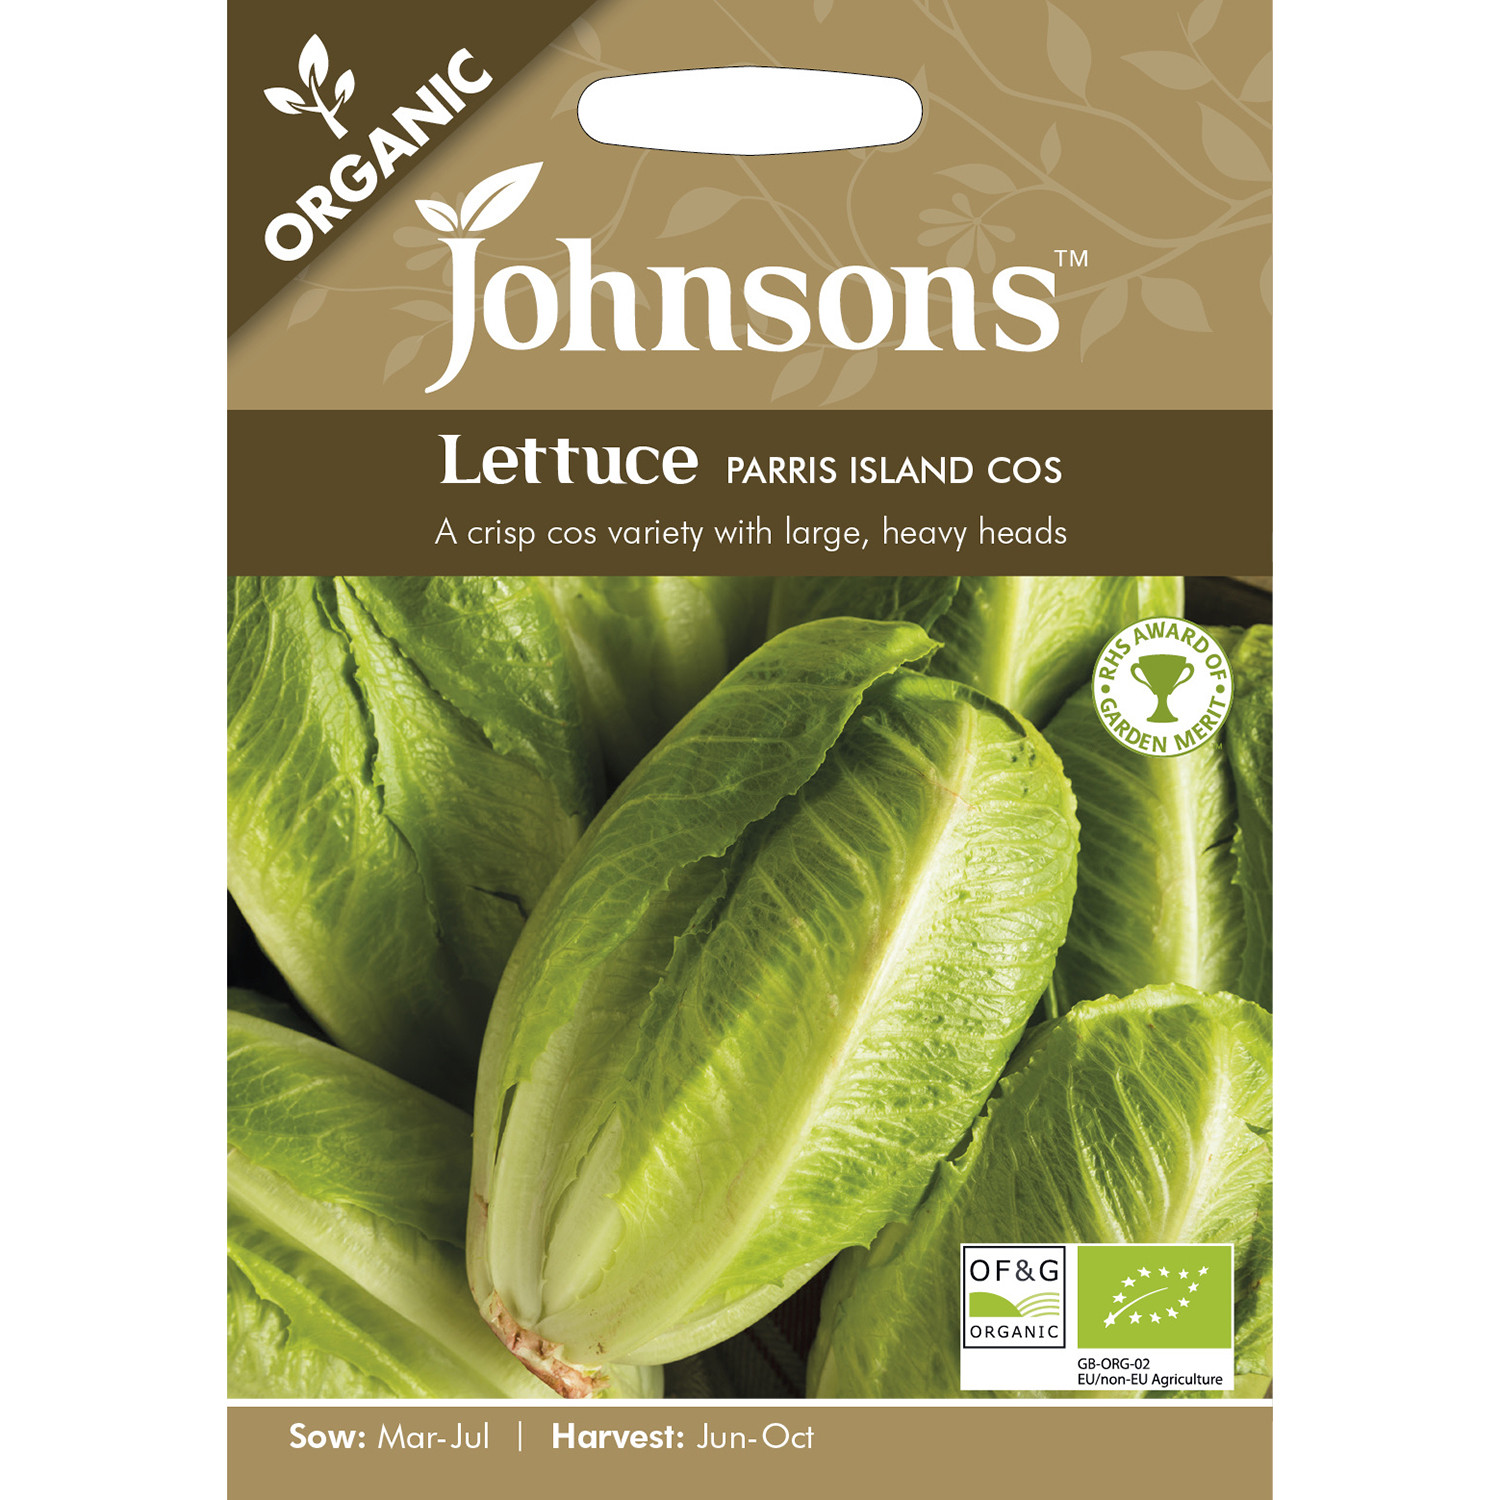 Johnsons Organic Parris Island Cos Lettuce Seeds Image 2